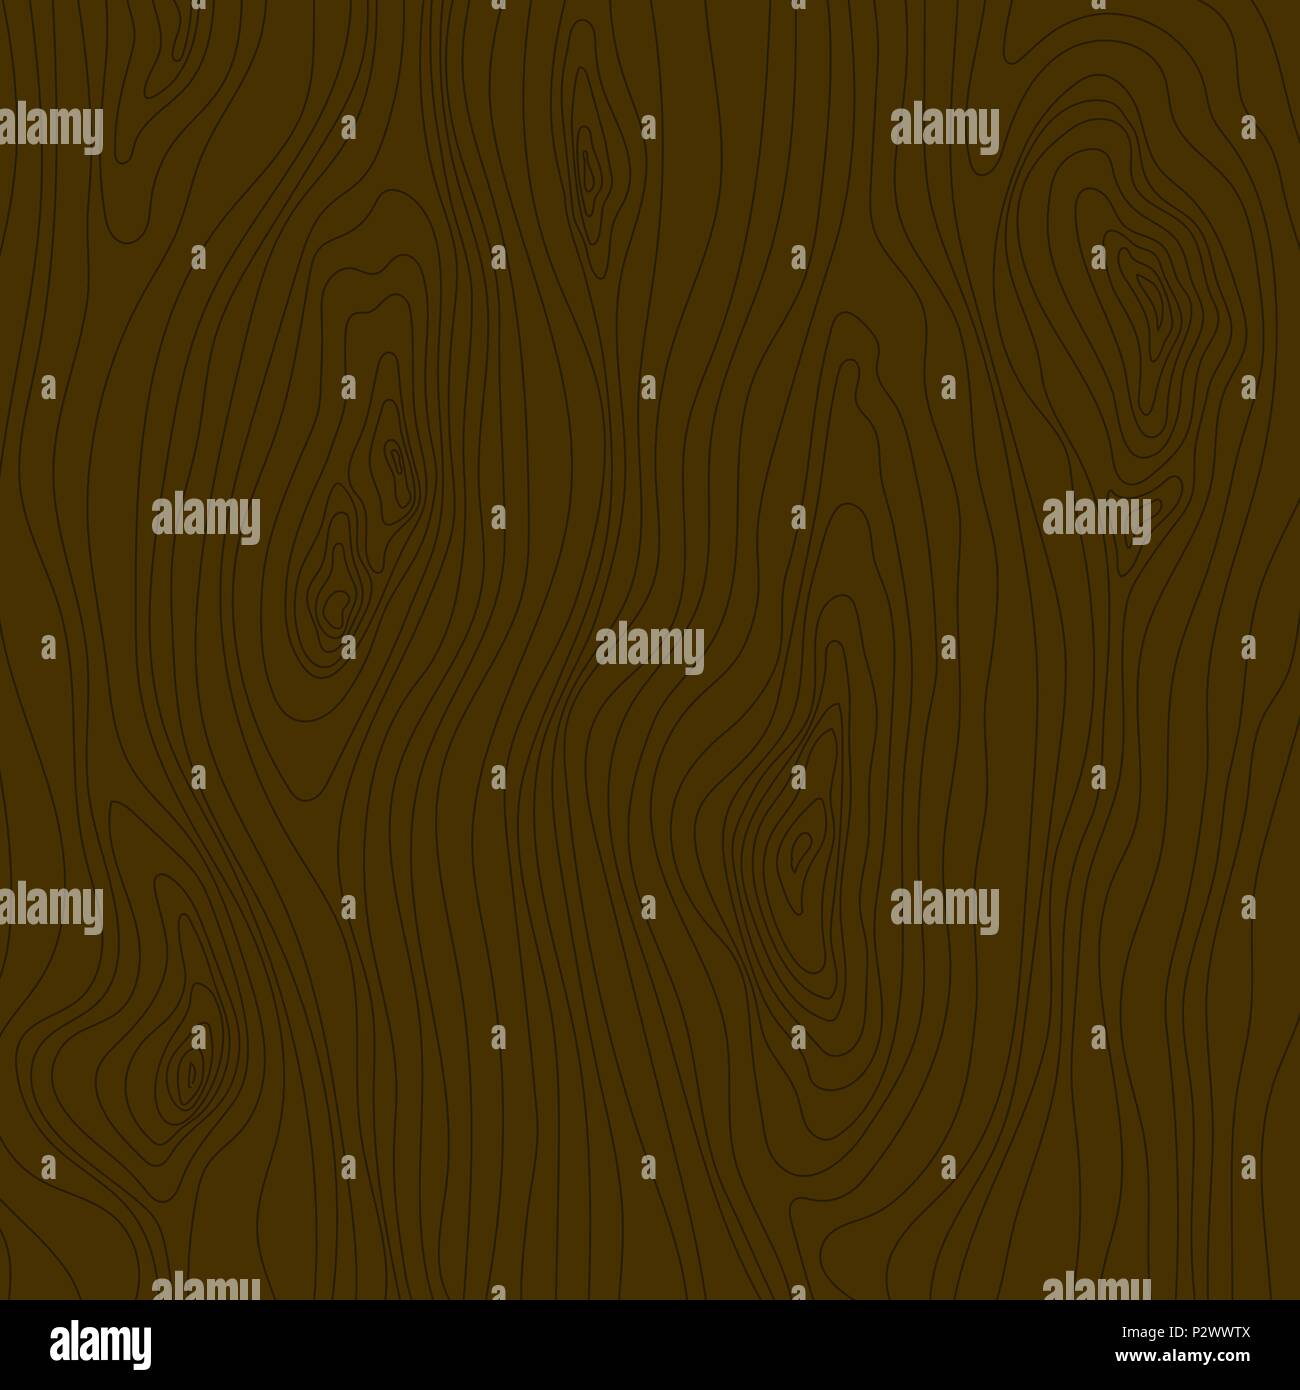 Brown wooden texture. Wood grain pattern. Cartoon abstract fibers structure background, vector illustration Stock Vector